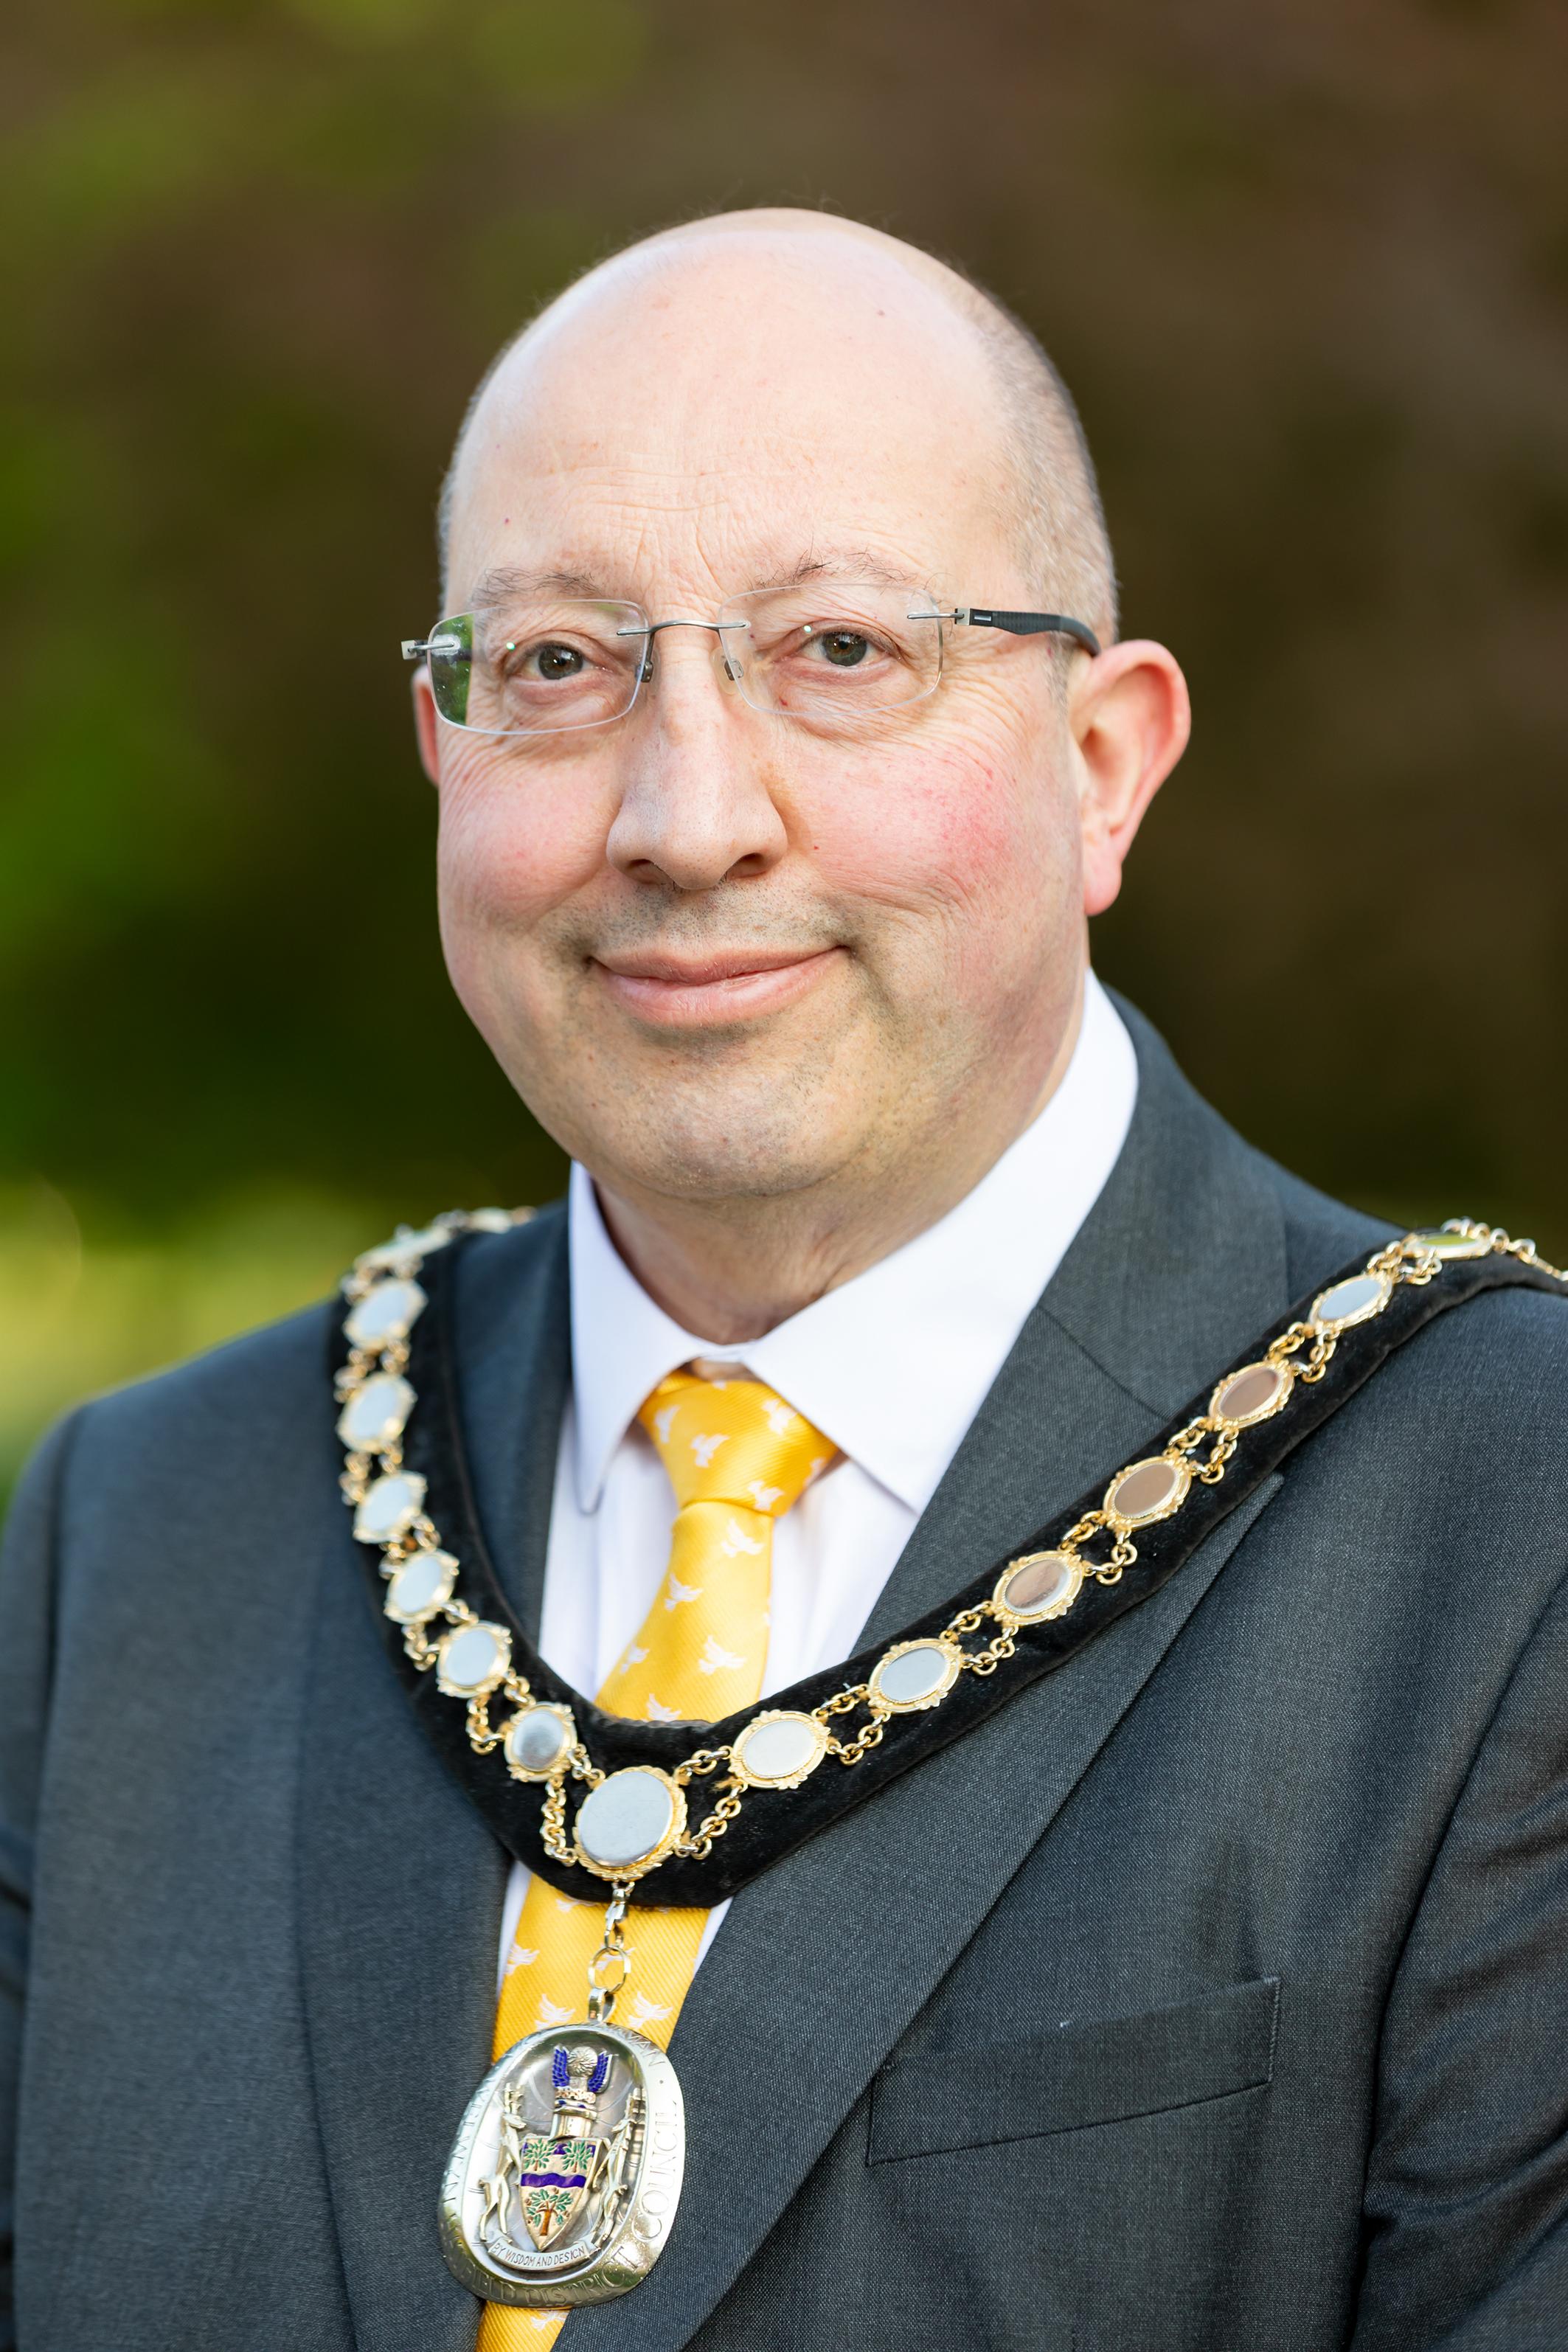 Image of WH Deputy Mayor, Frank Marsh